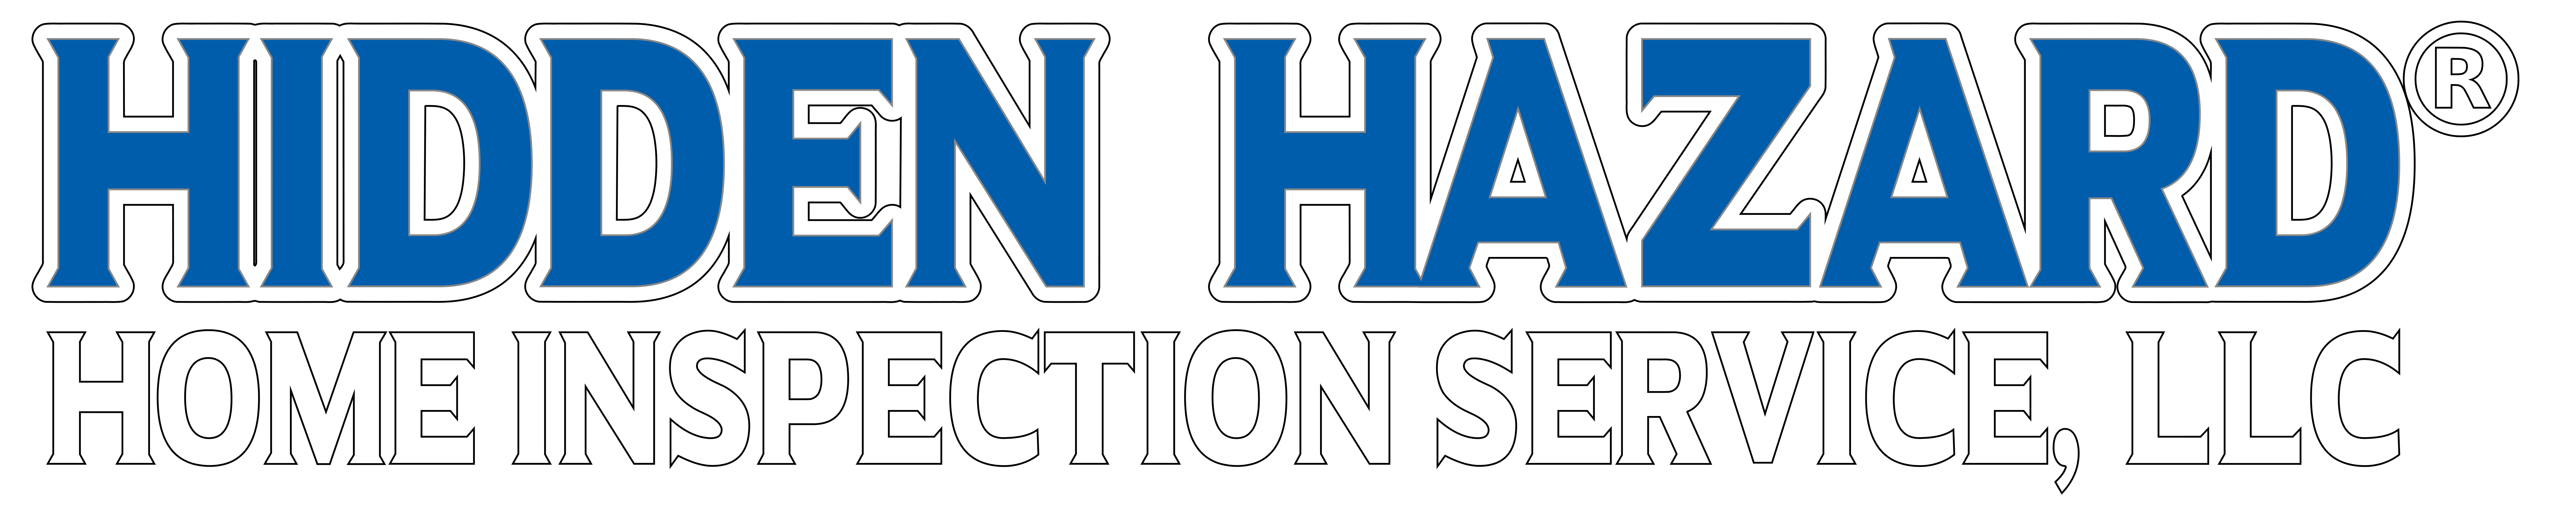 Hidden Hazard Home Inspection Service, LLC Logo